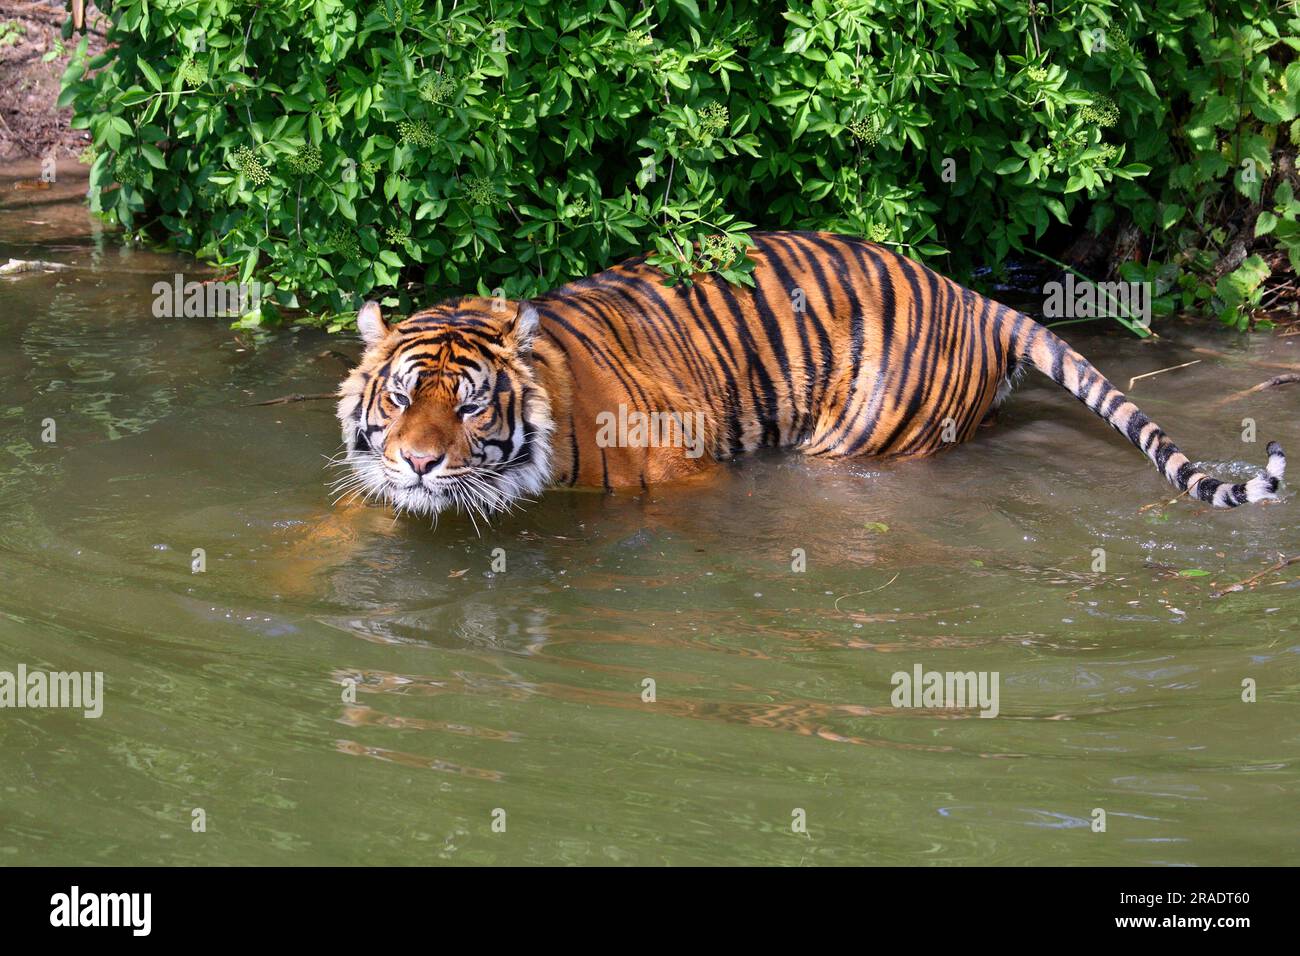 Sumatran tiger in the water Stock Photo